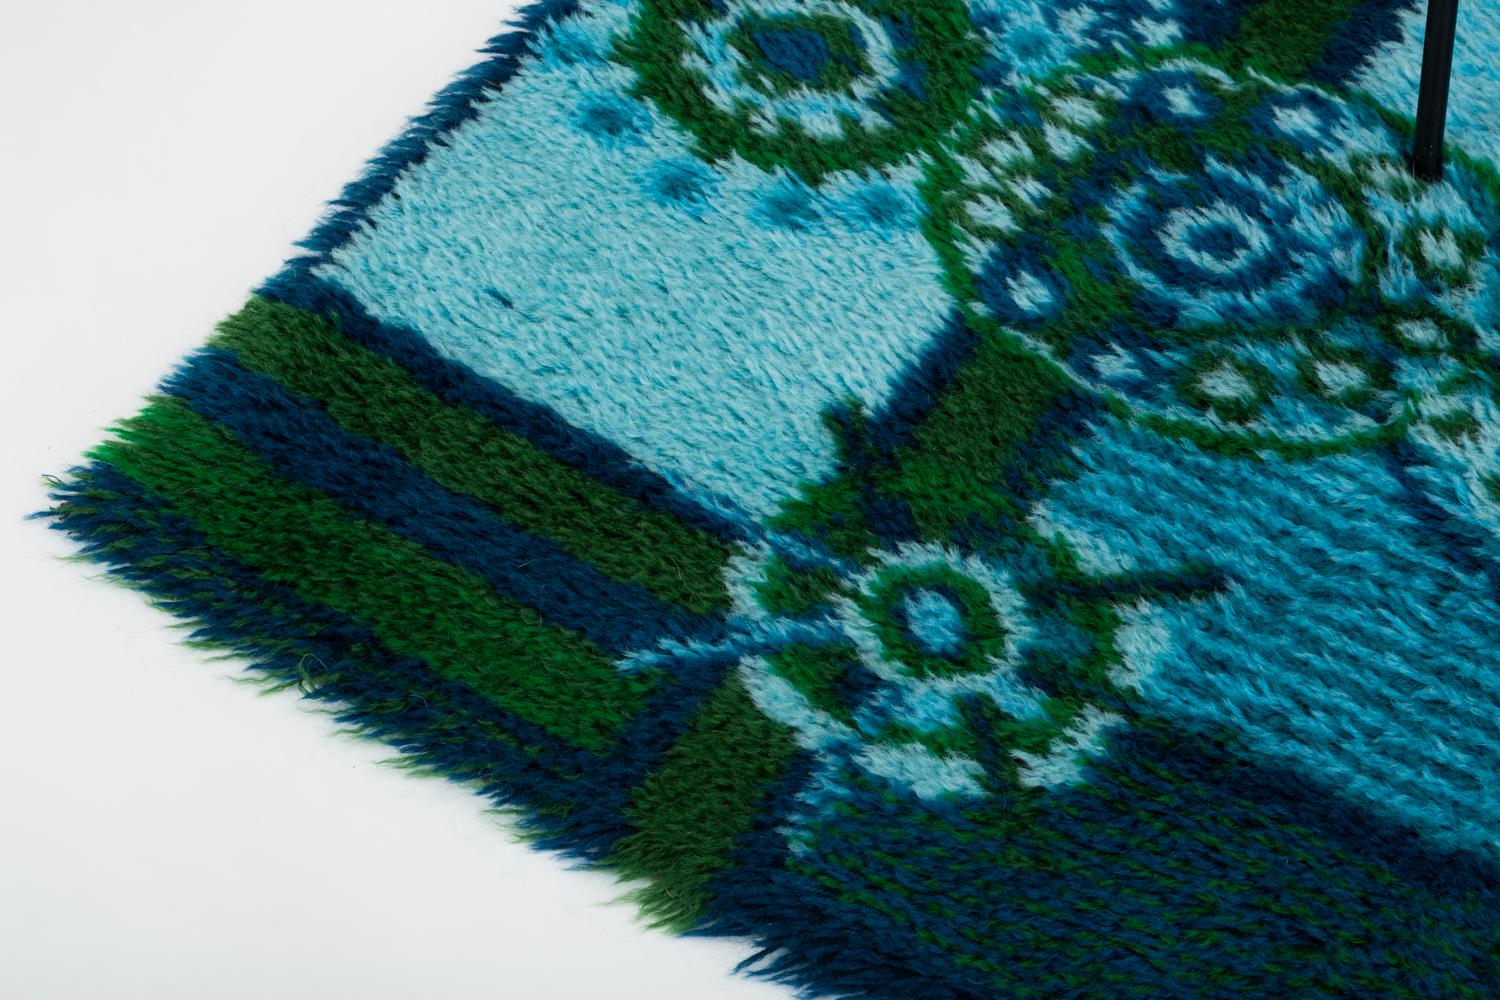 Danish Ege Rya Rug in “Blue Snowflake” Design